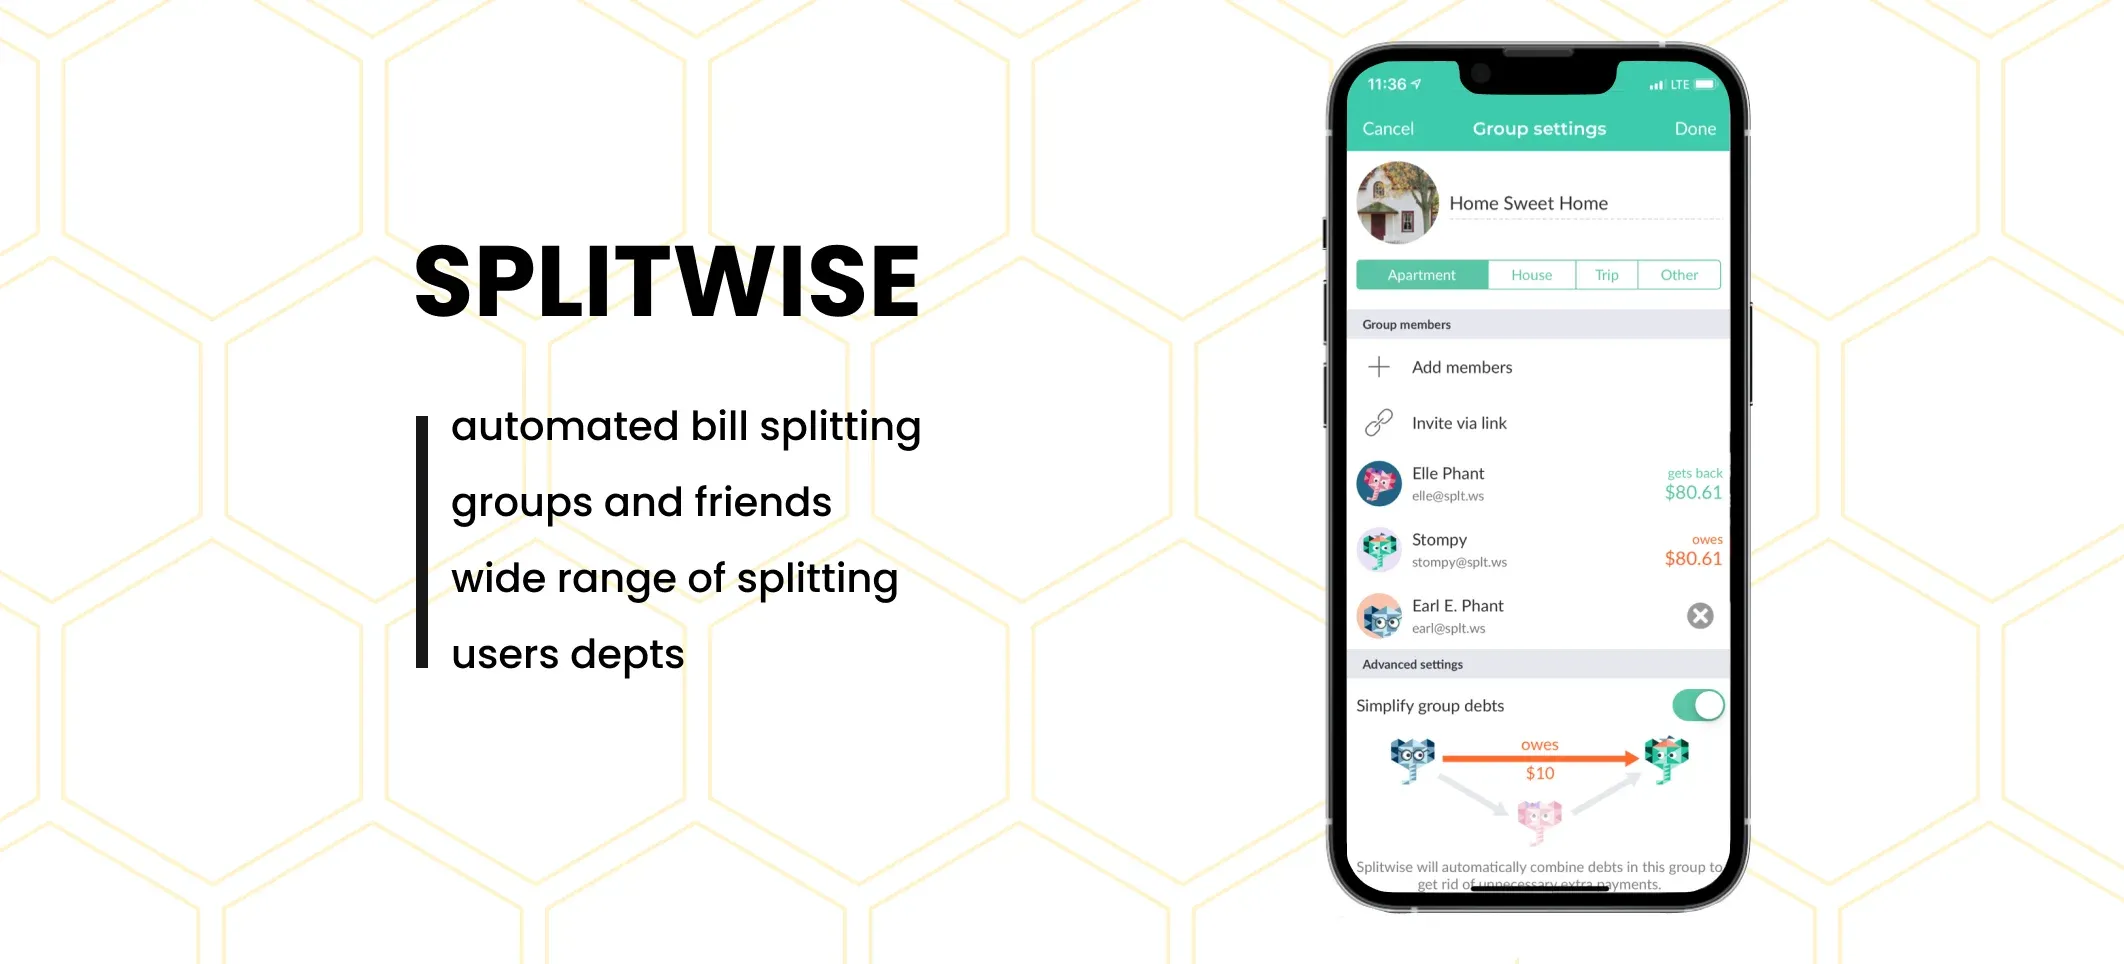 key features of splitwise app